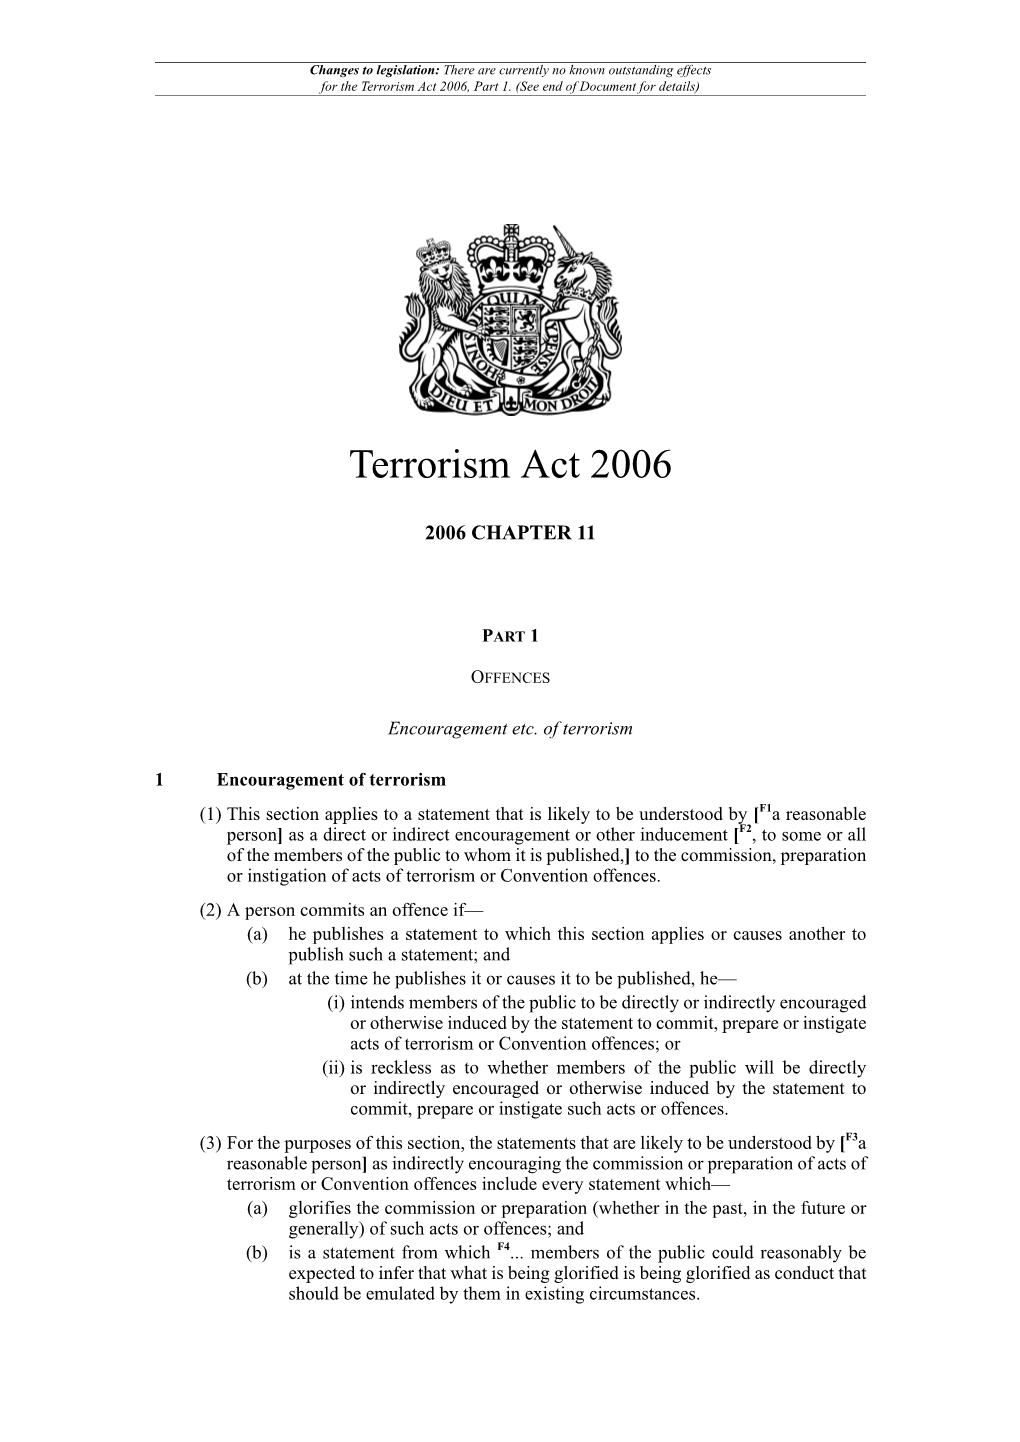 Terrorism Act 2006, Part 1